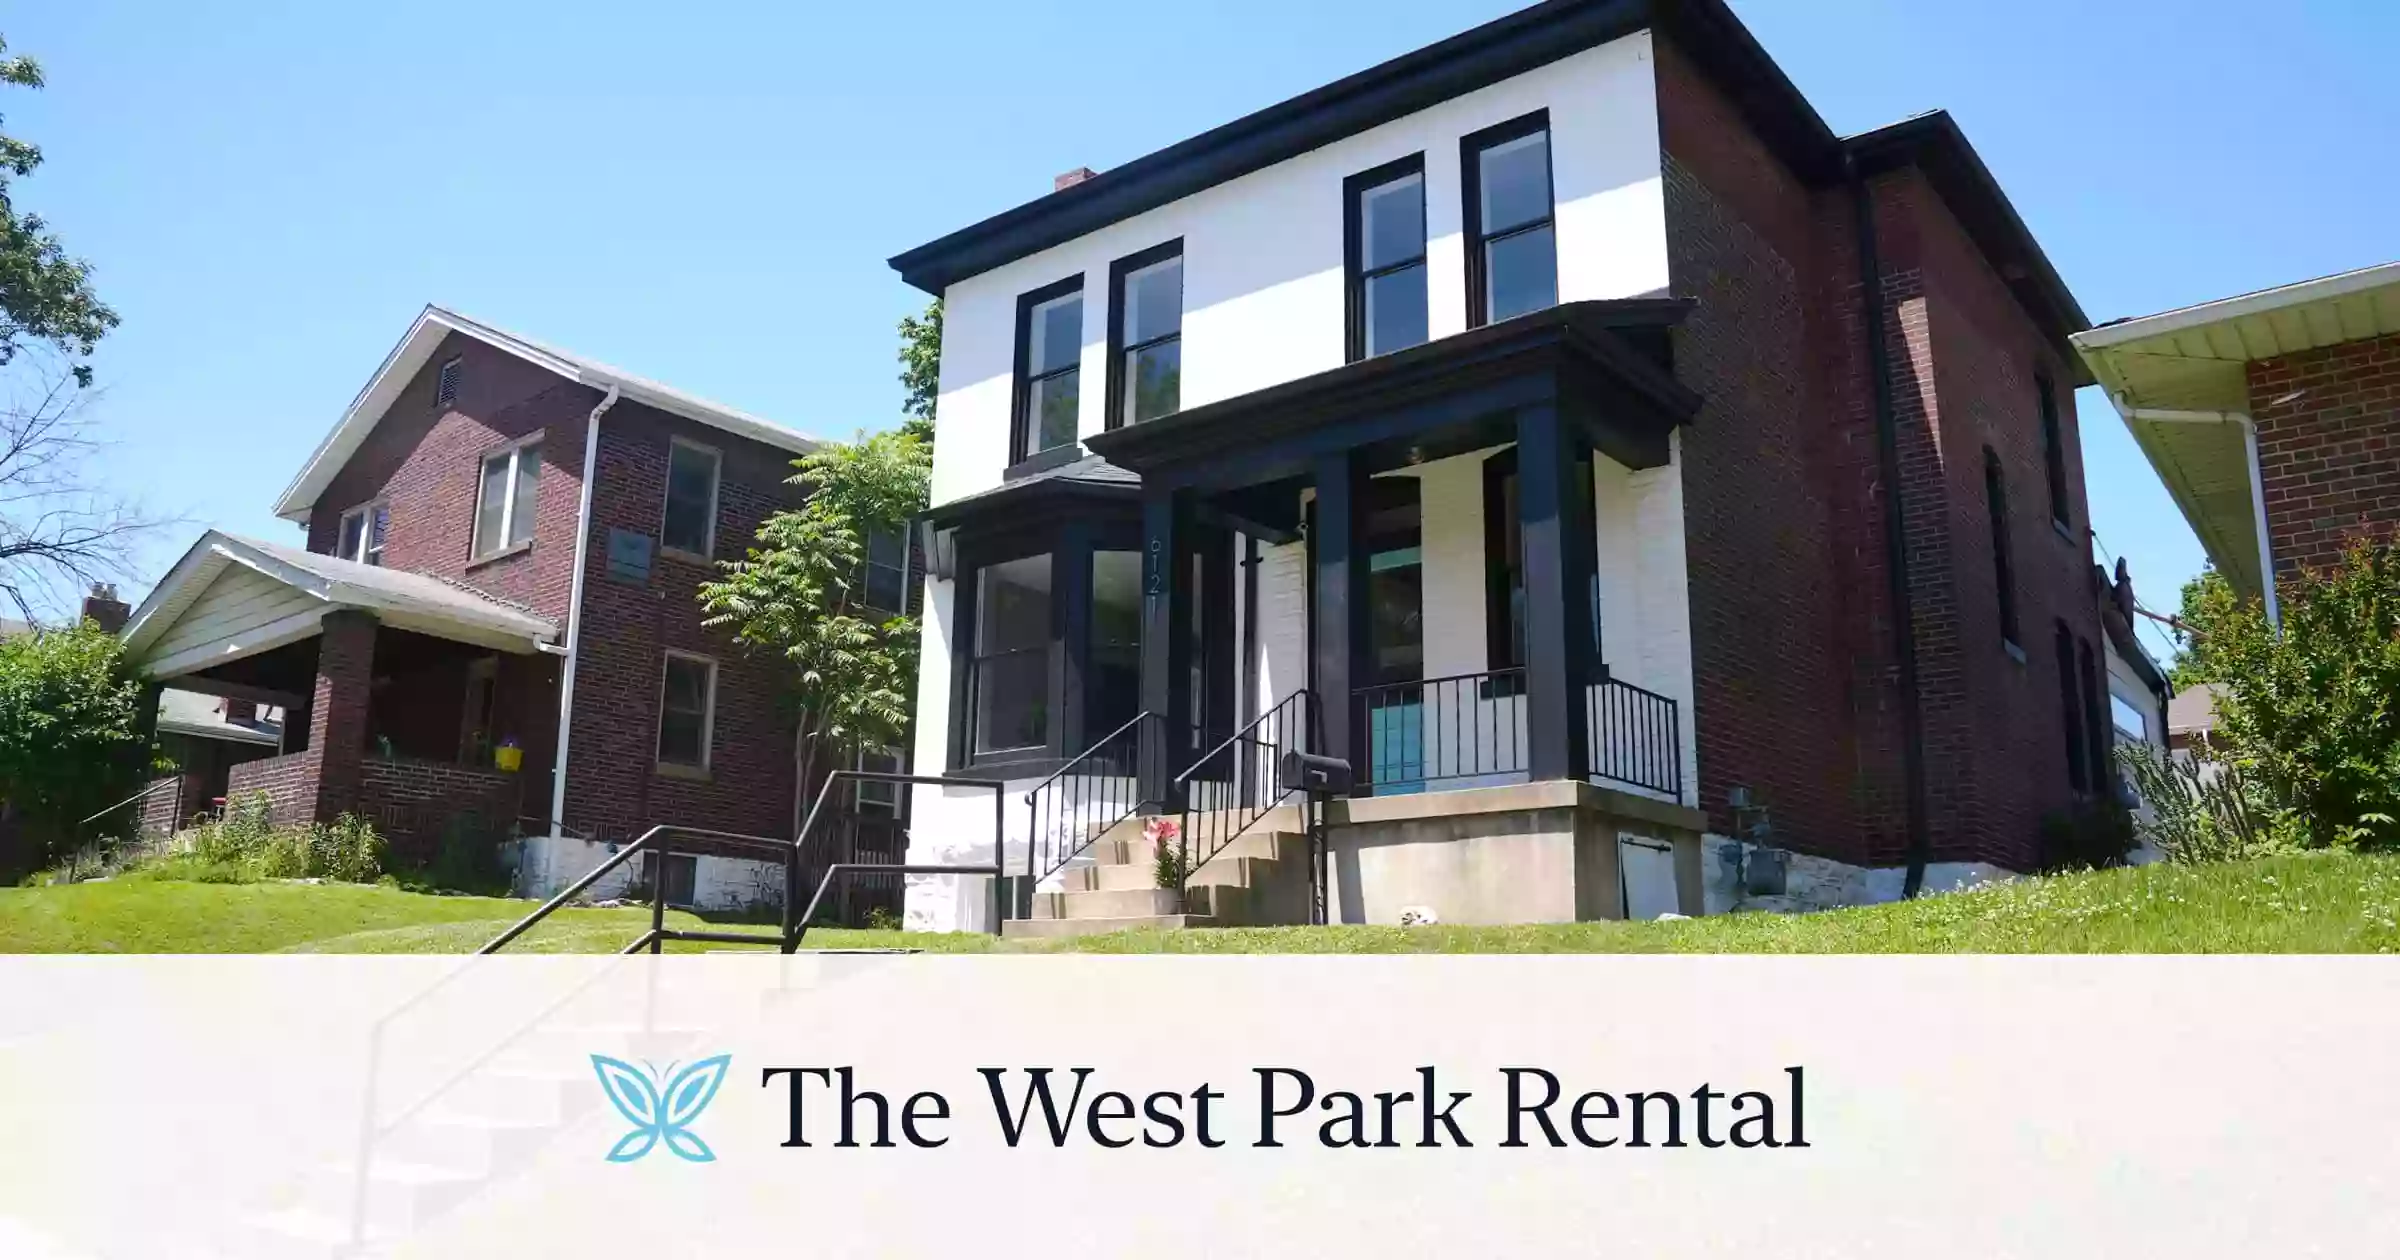 The West Park Rental